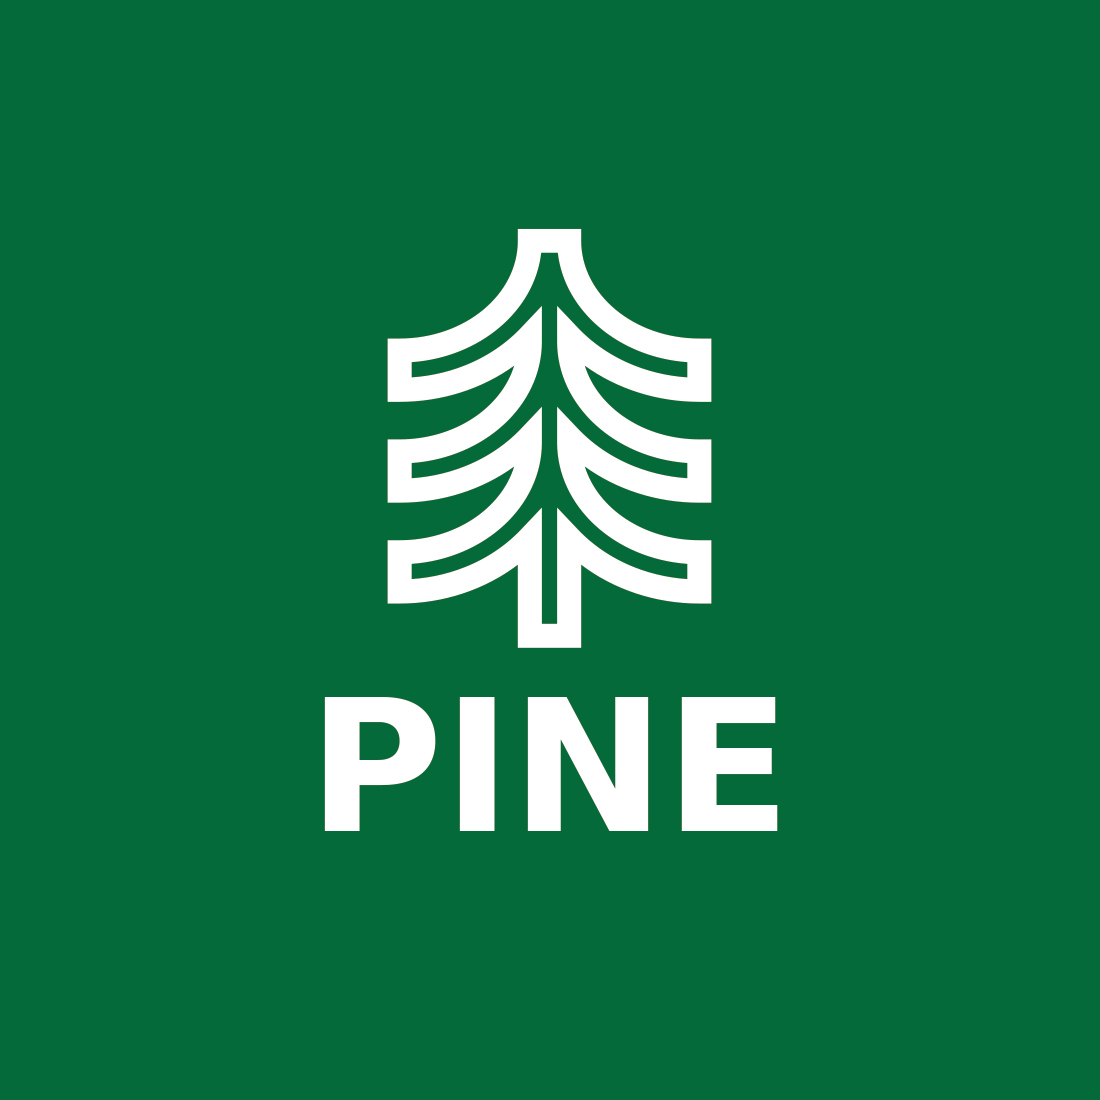 Pine Tree Logo Design Template | Nature Logo preview image.